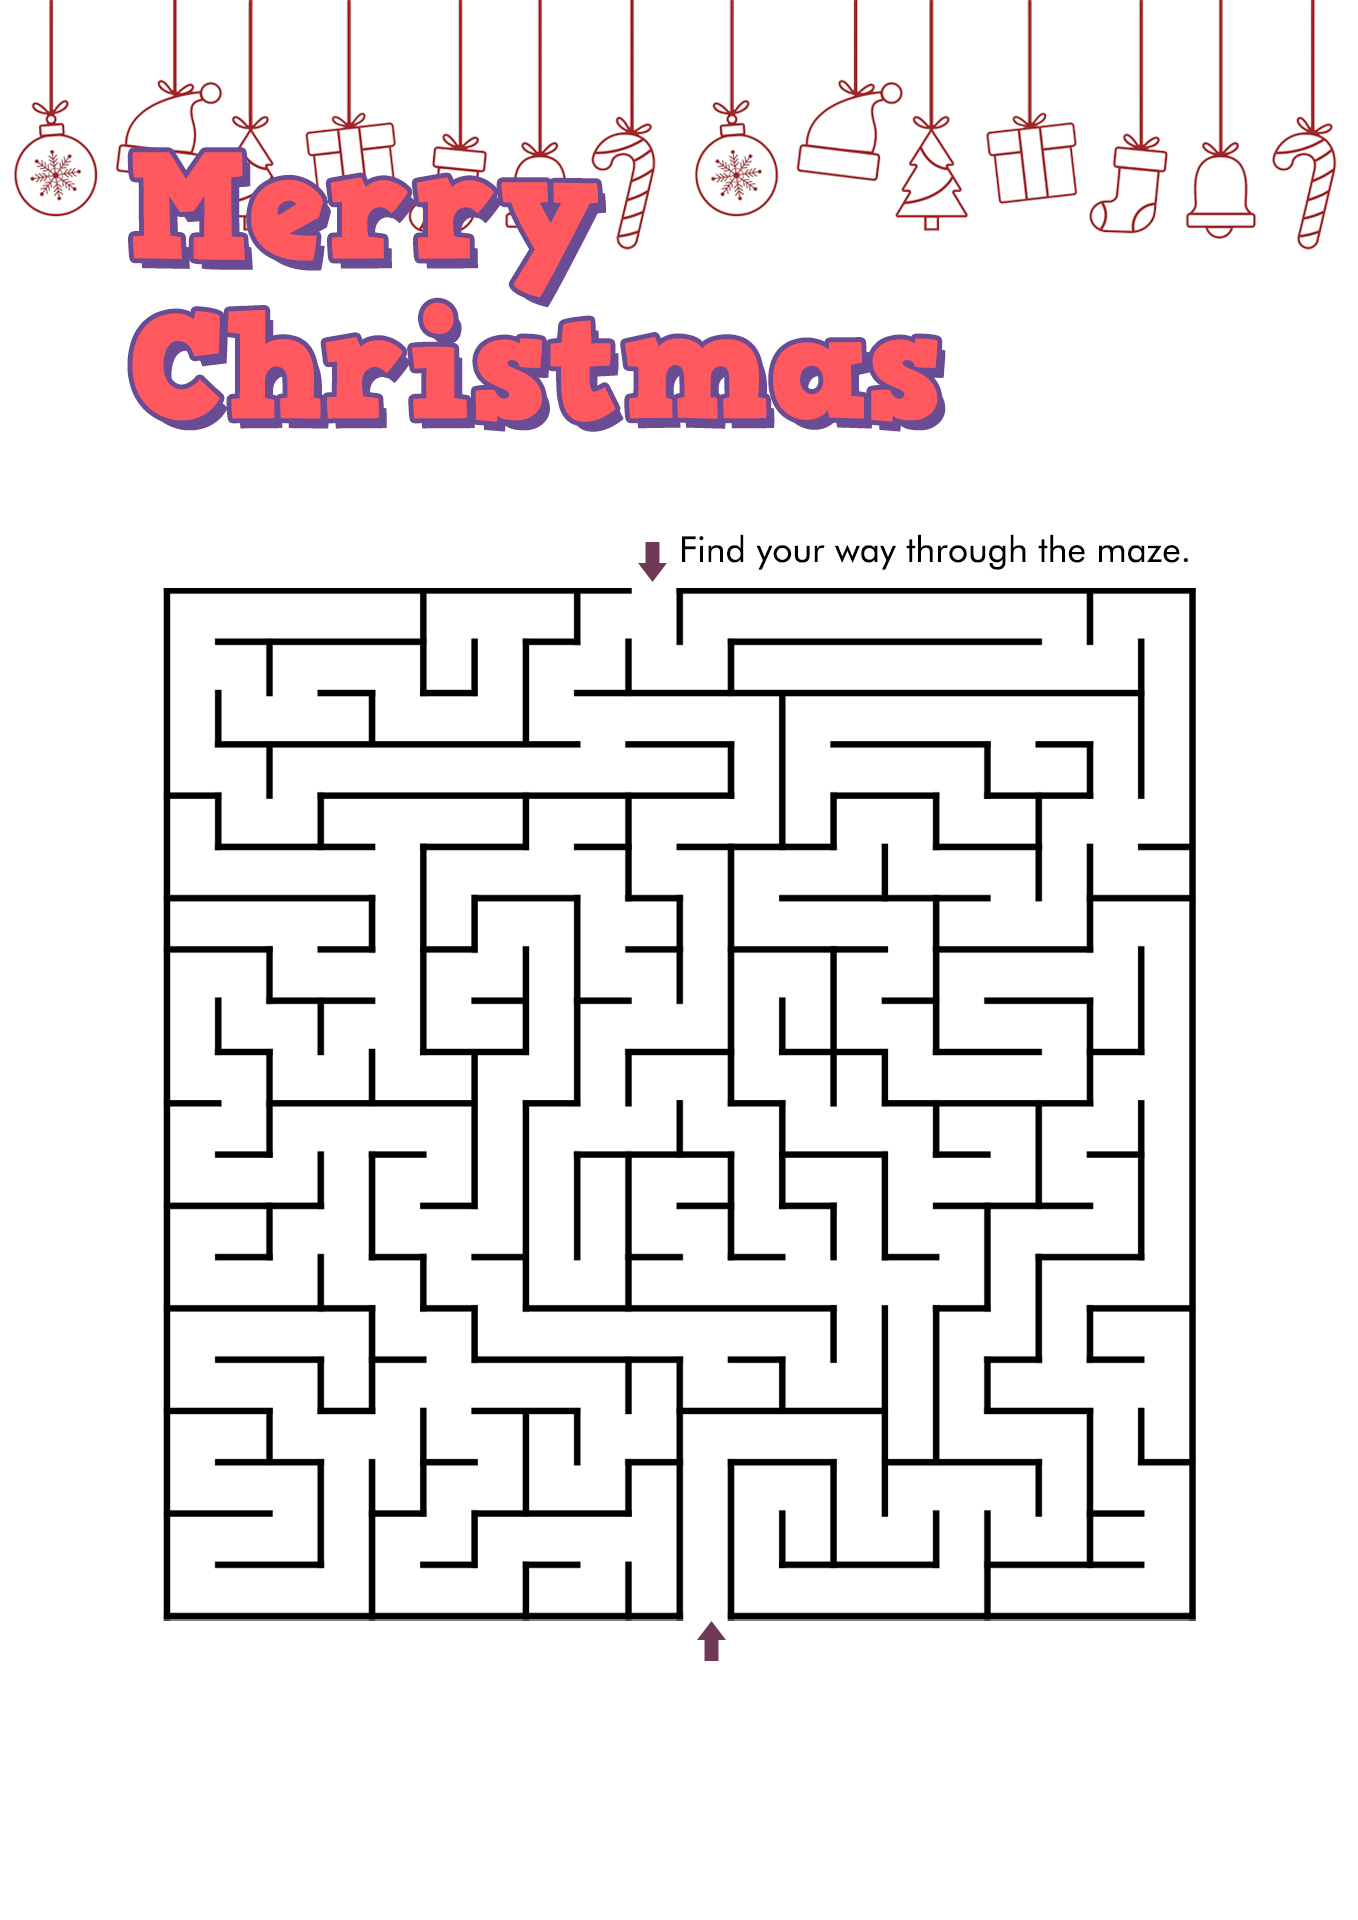 Sunday School Christmas Maze